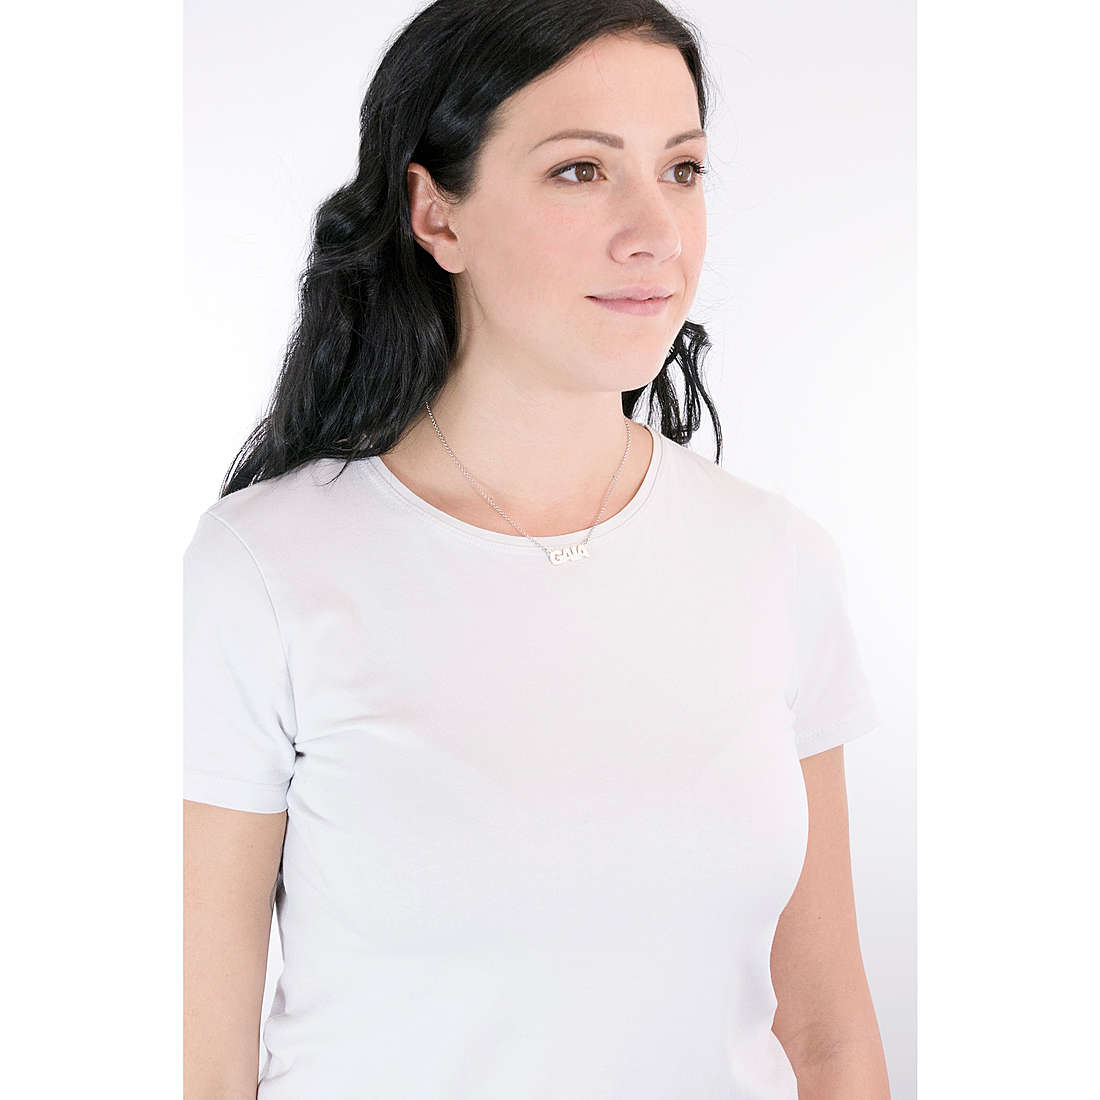 GioiaPura necklaces Nominum woman GYXCAR0072-49 wearing